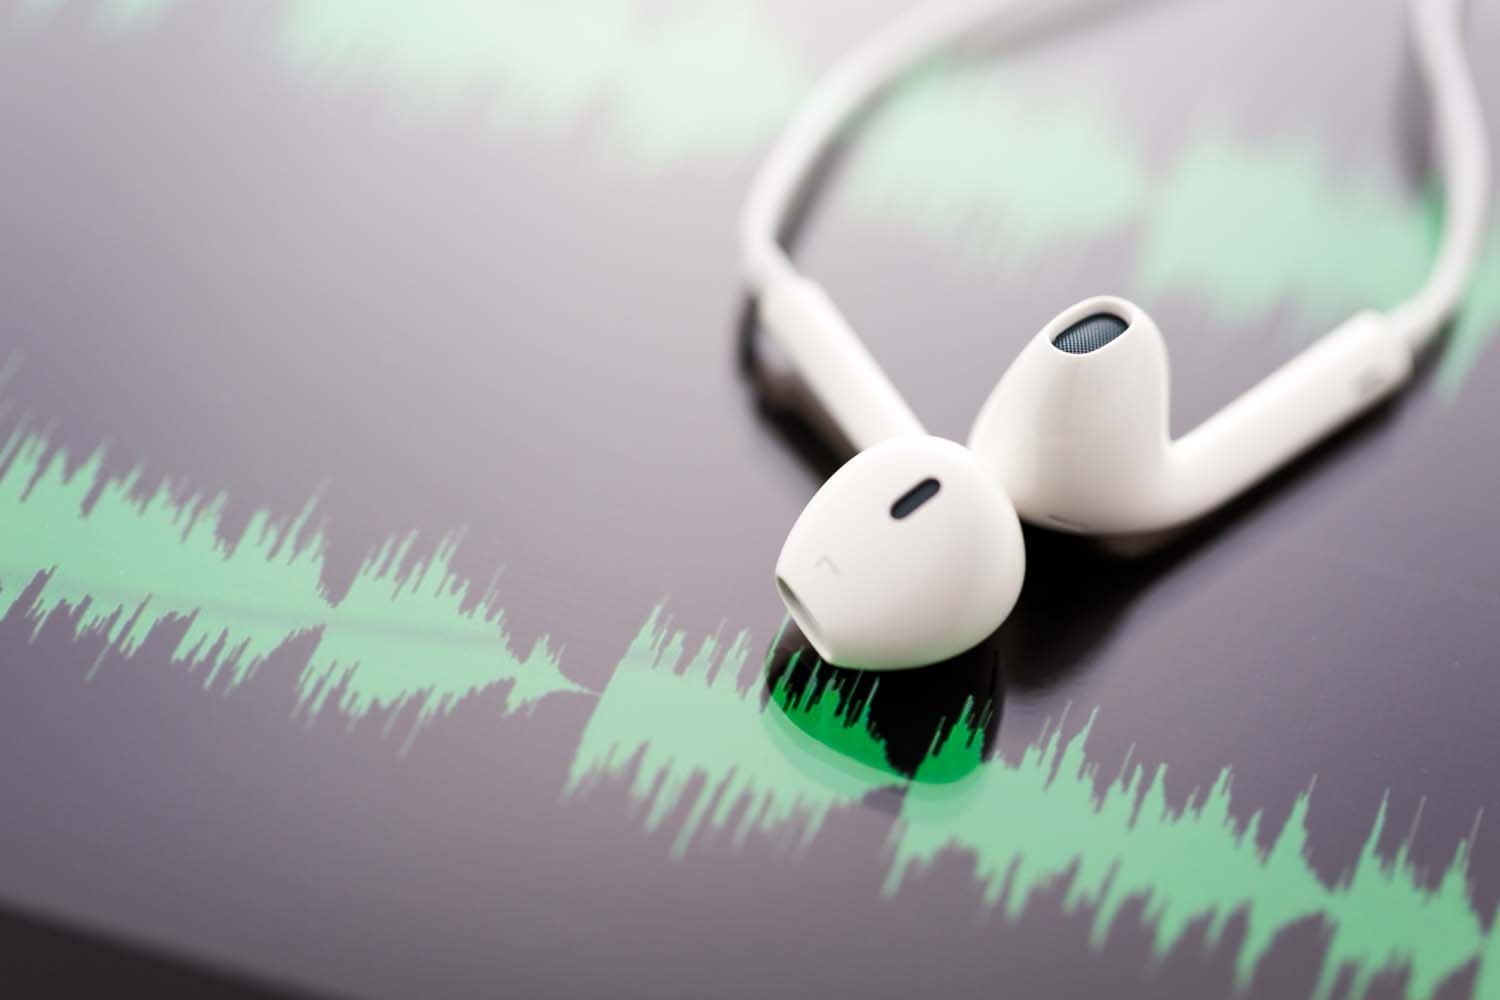 Audio Headphones lying on an image of an audio waveform